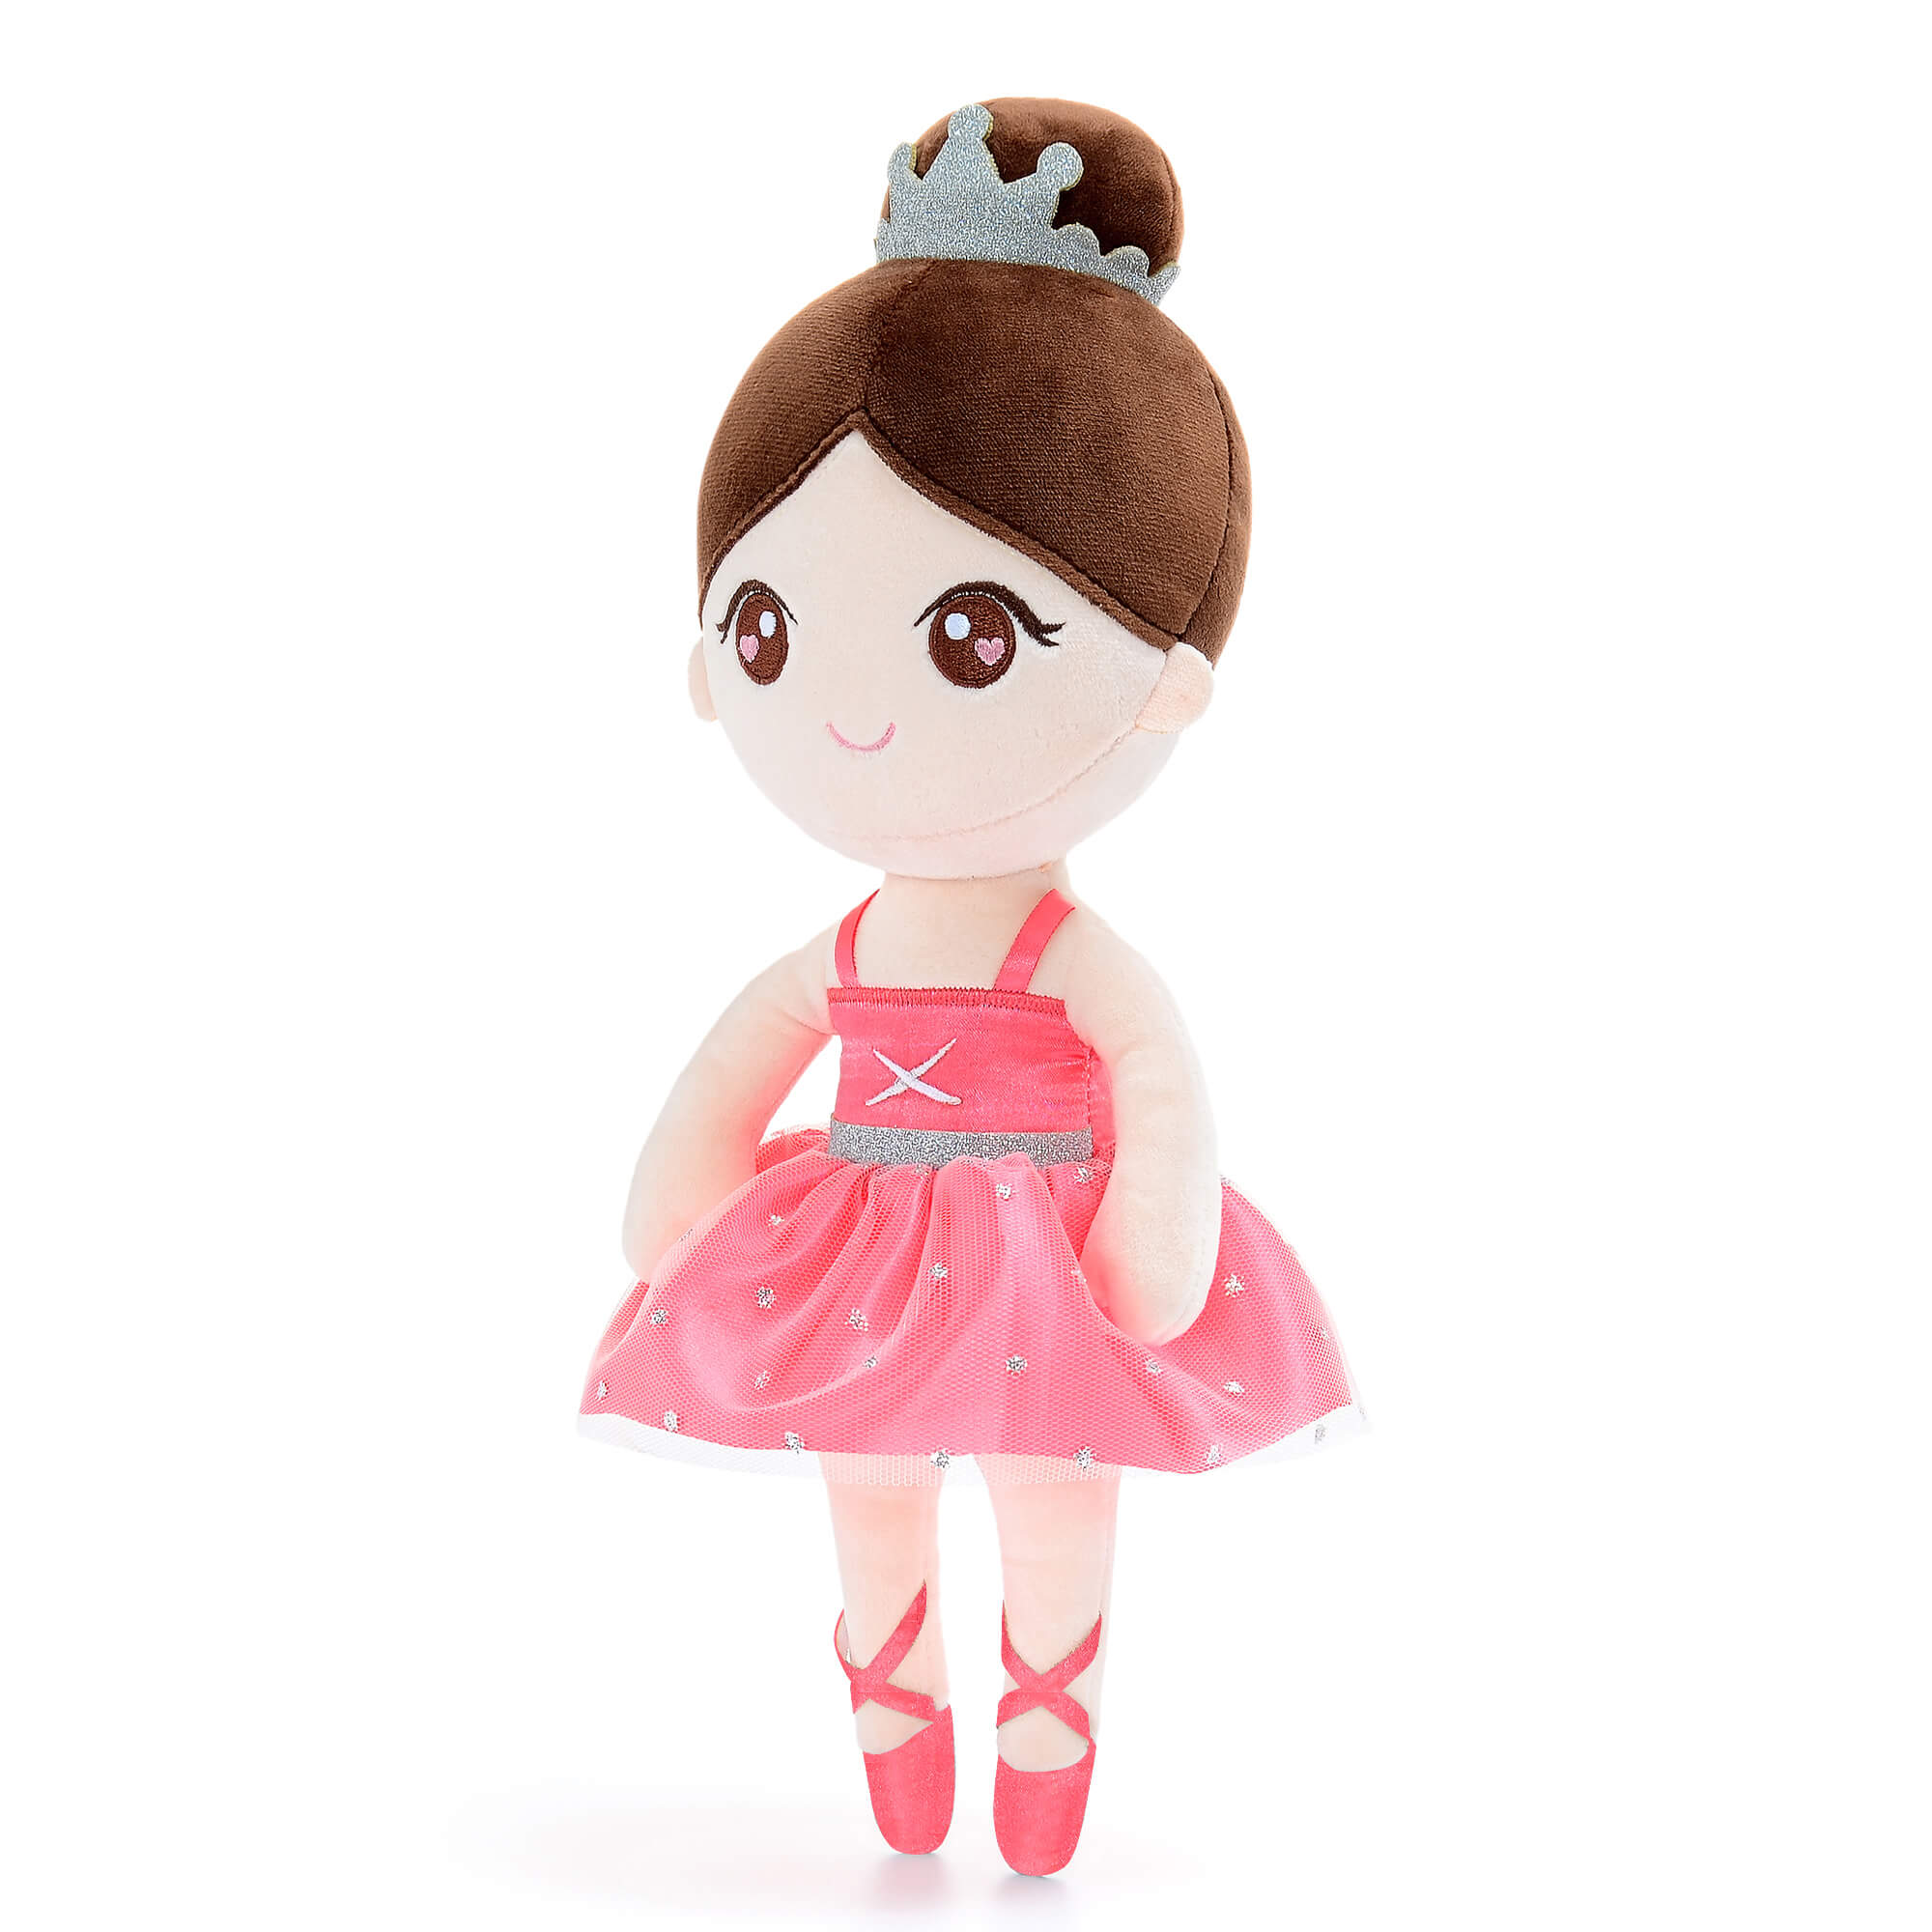 Gloveleya 13-inch Personalized Plush Dolls Ballerina Series Coral Powder Ballet Dream